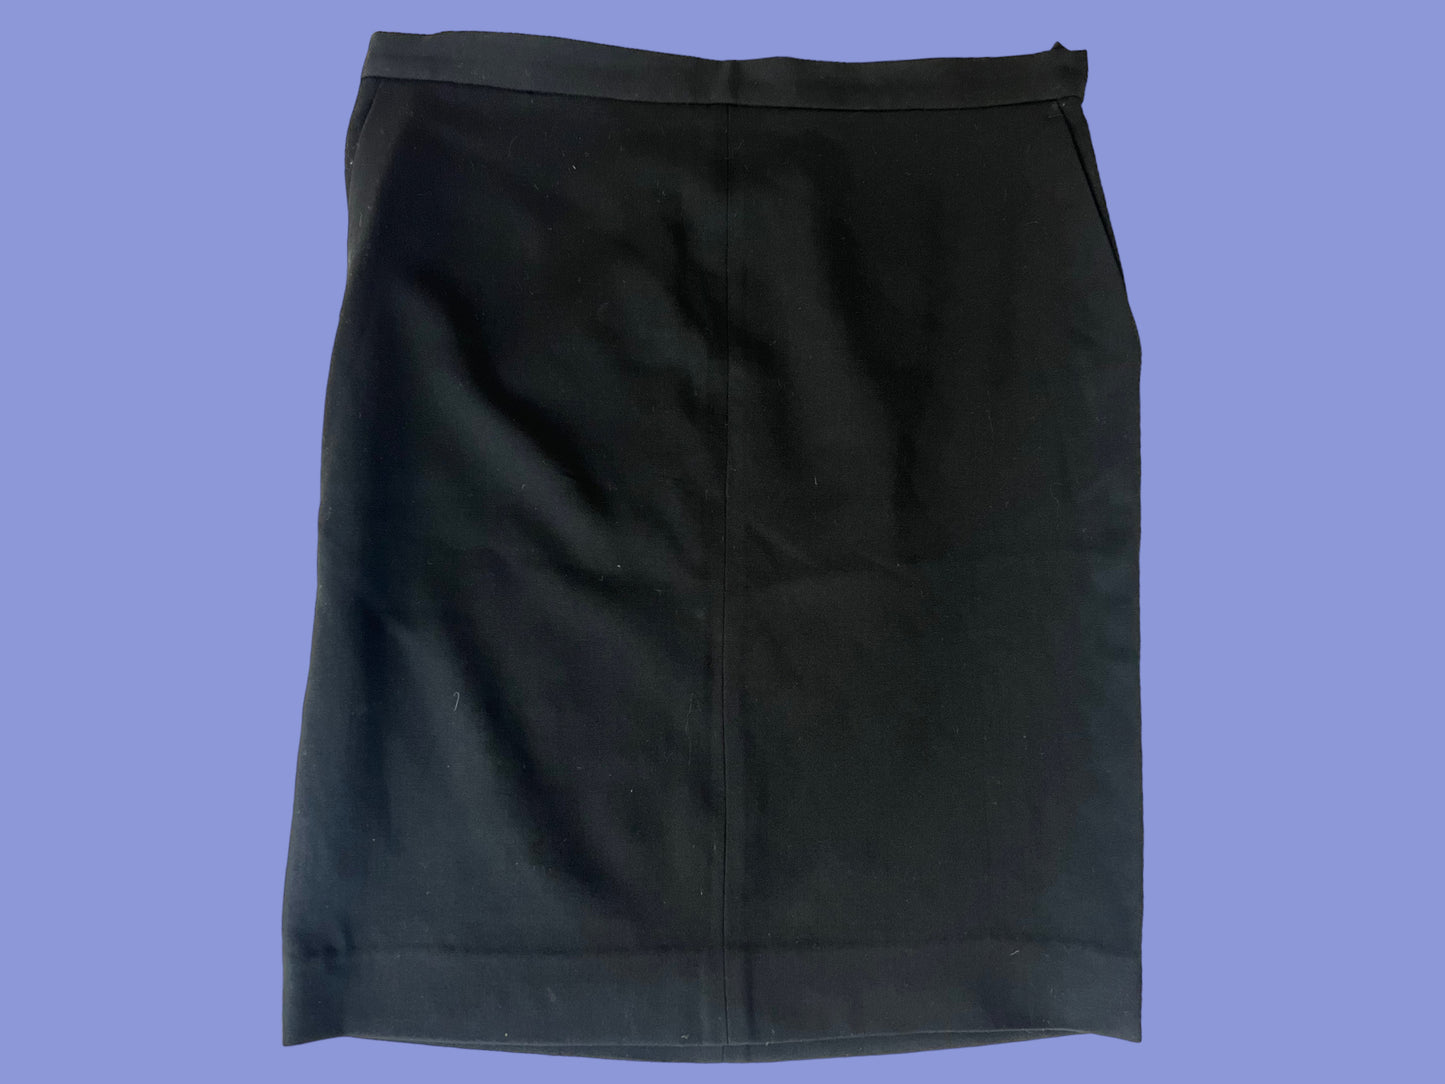 JEAN PAUL GAULTIER black skirt size large